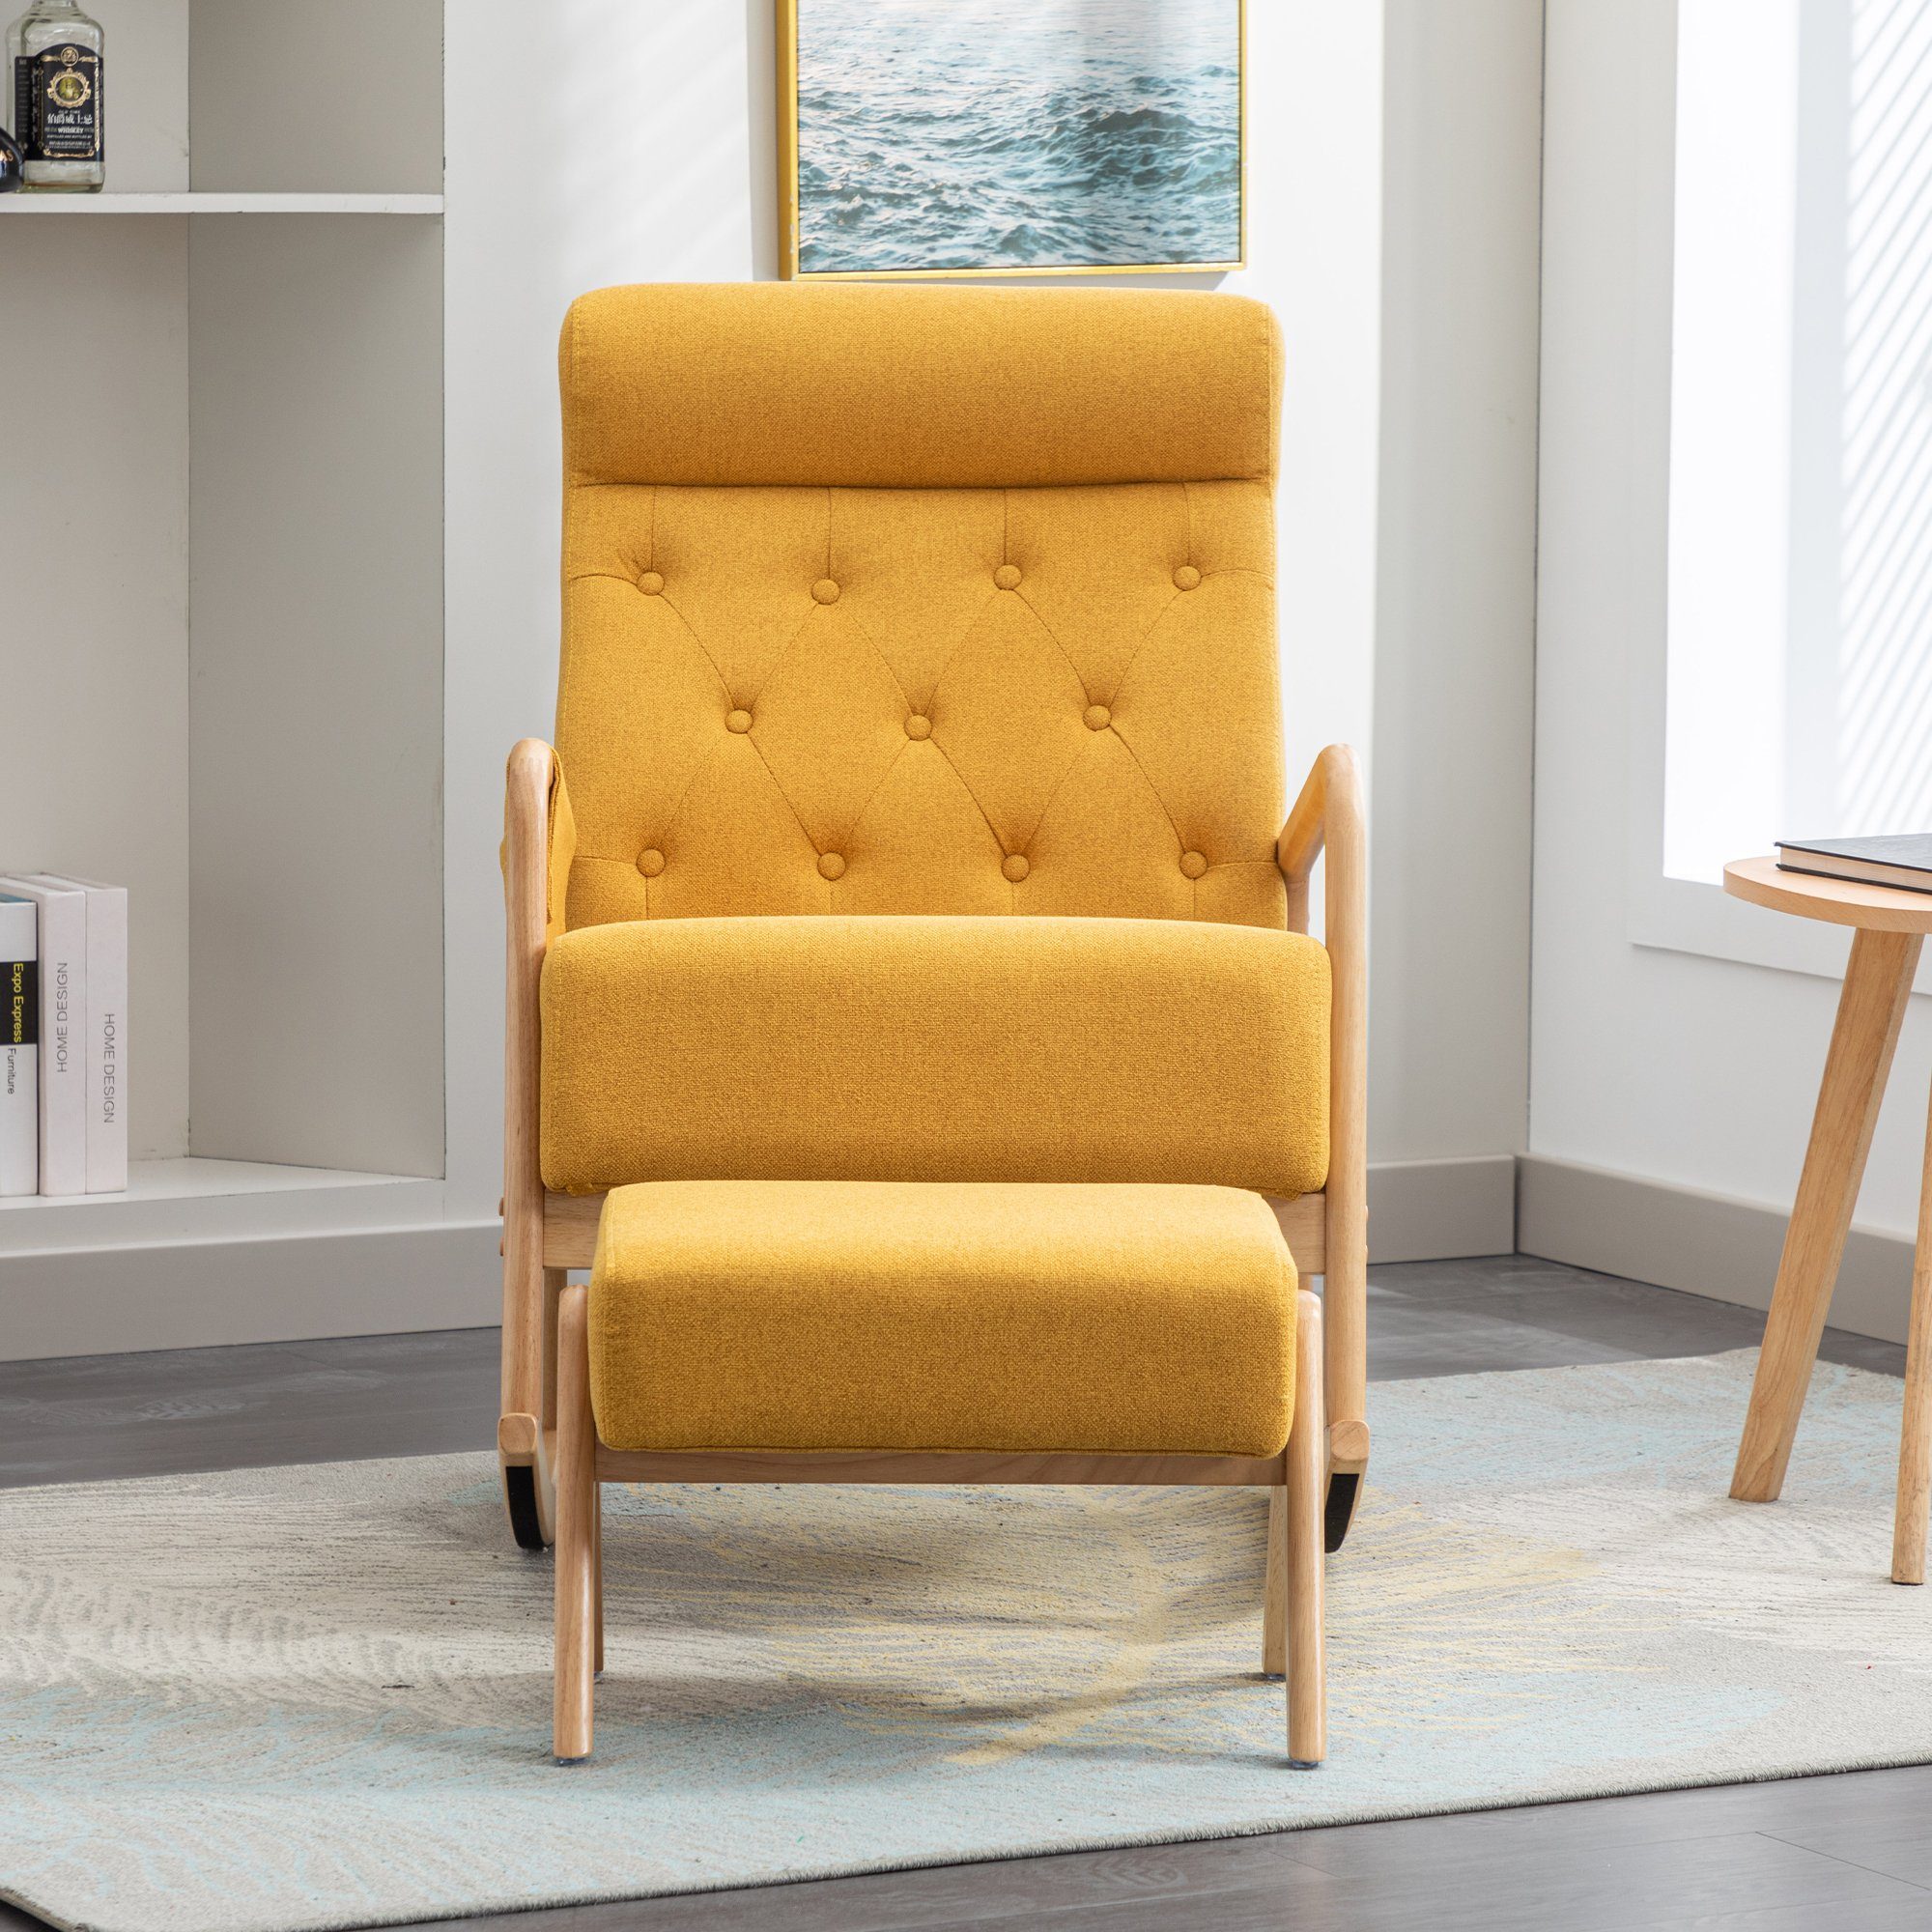 mehrfarbig Lounge-Sessel Schaukelstuhl Odikalo Gelb Einzelstuhl Rückenlehne mane gepolstert